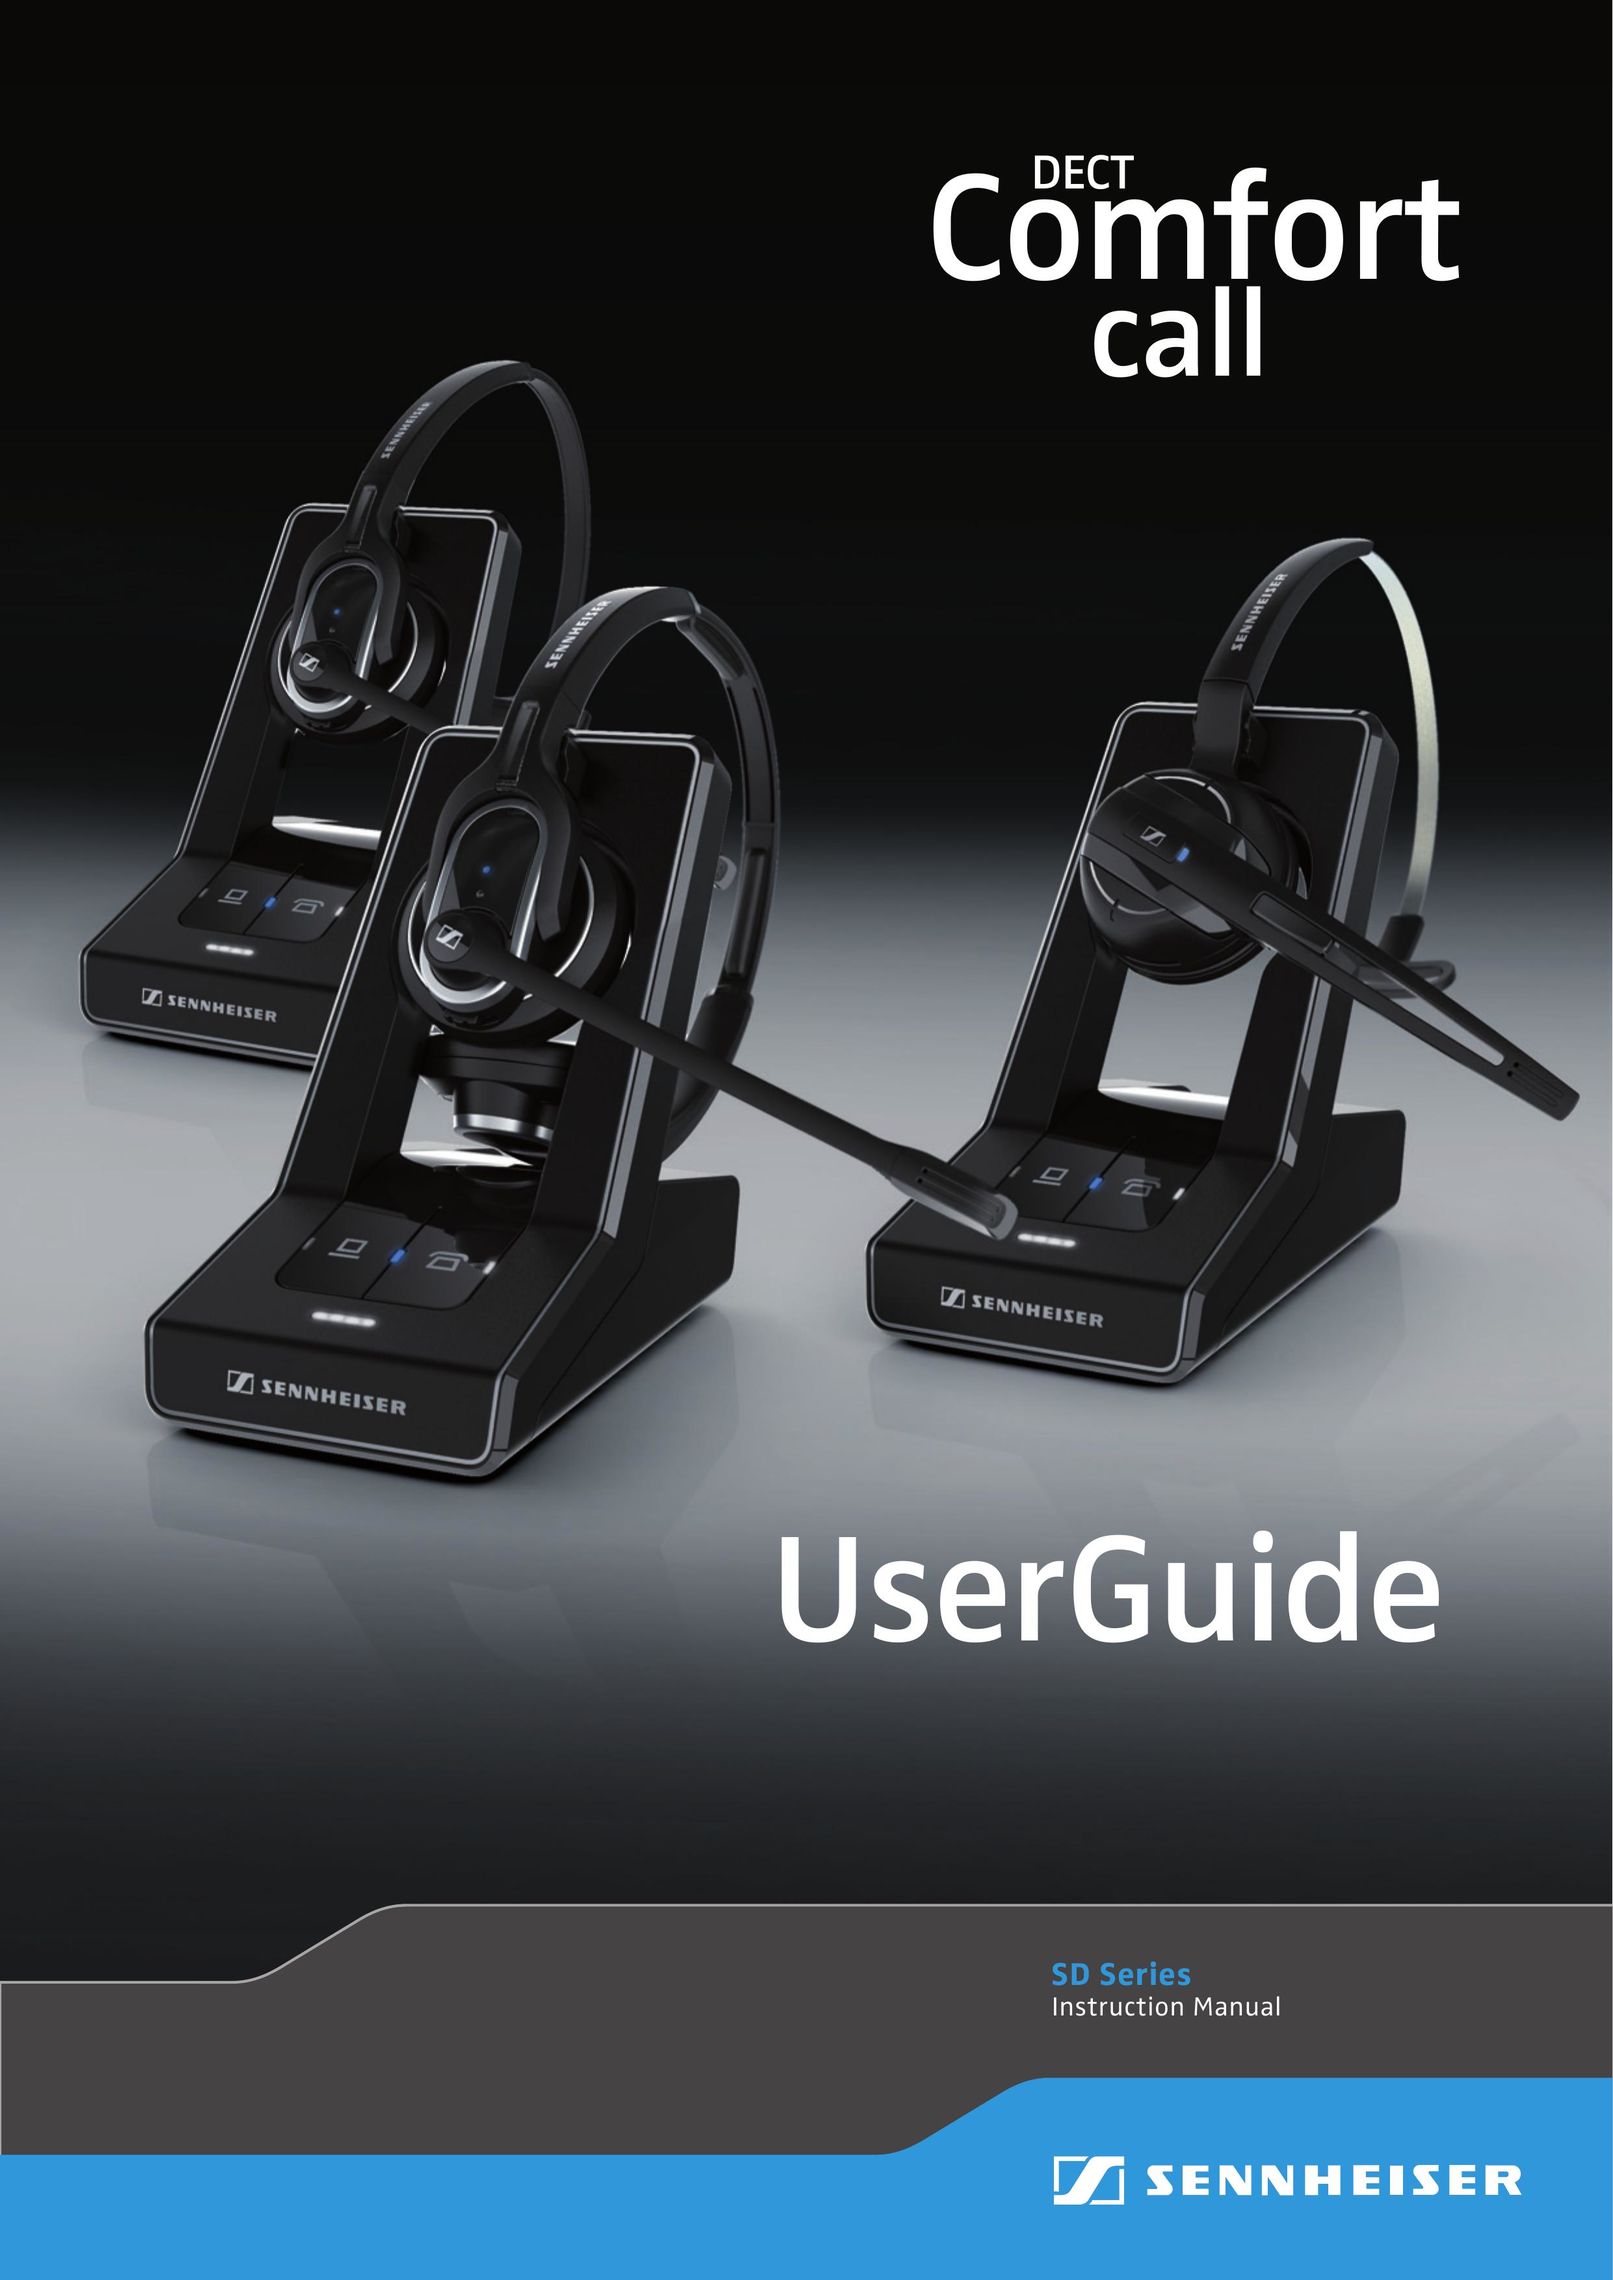 Sennheiser SD Office HS monaural Video Game Headset User Manual